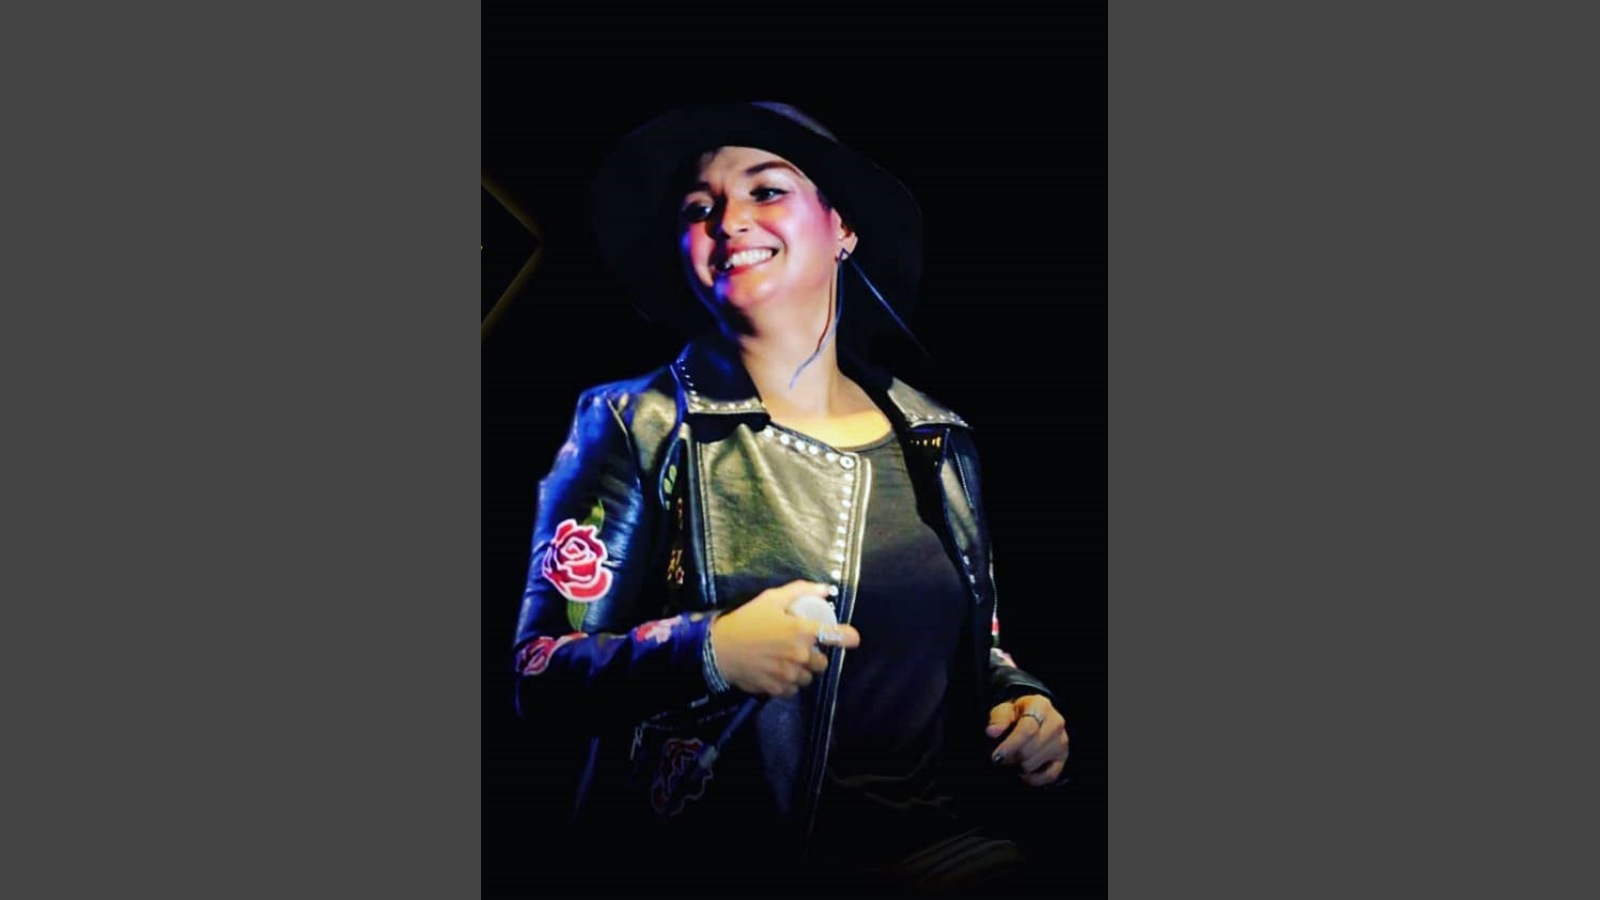 Biodata Connie Dio Lengkap Umur dan Agama, Lady Rocker Indonesia Era 90an Gaes!